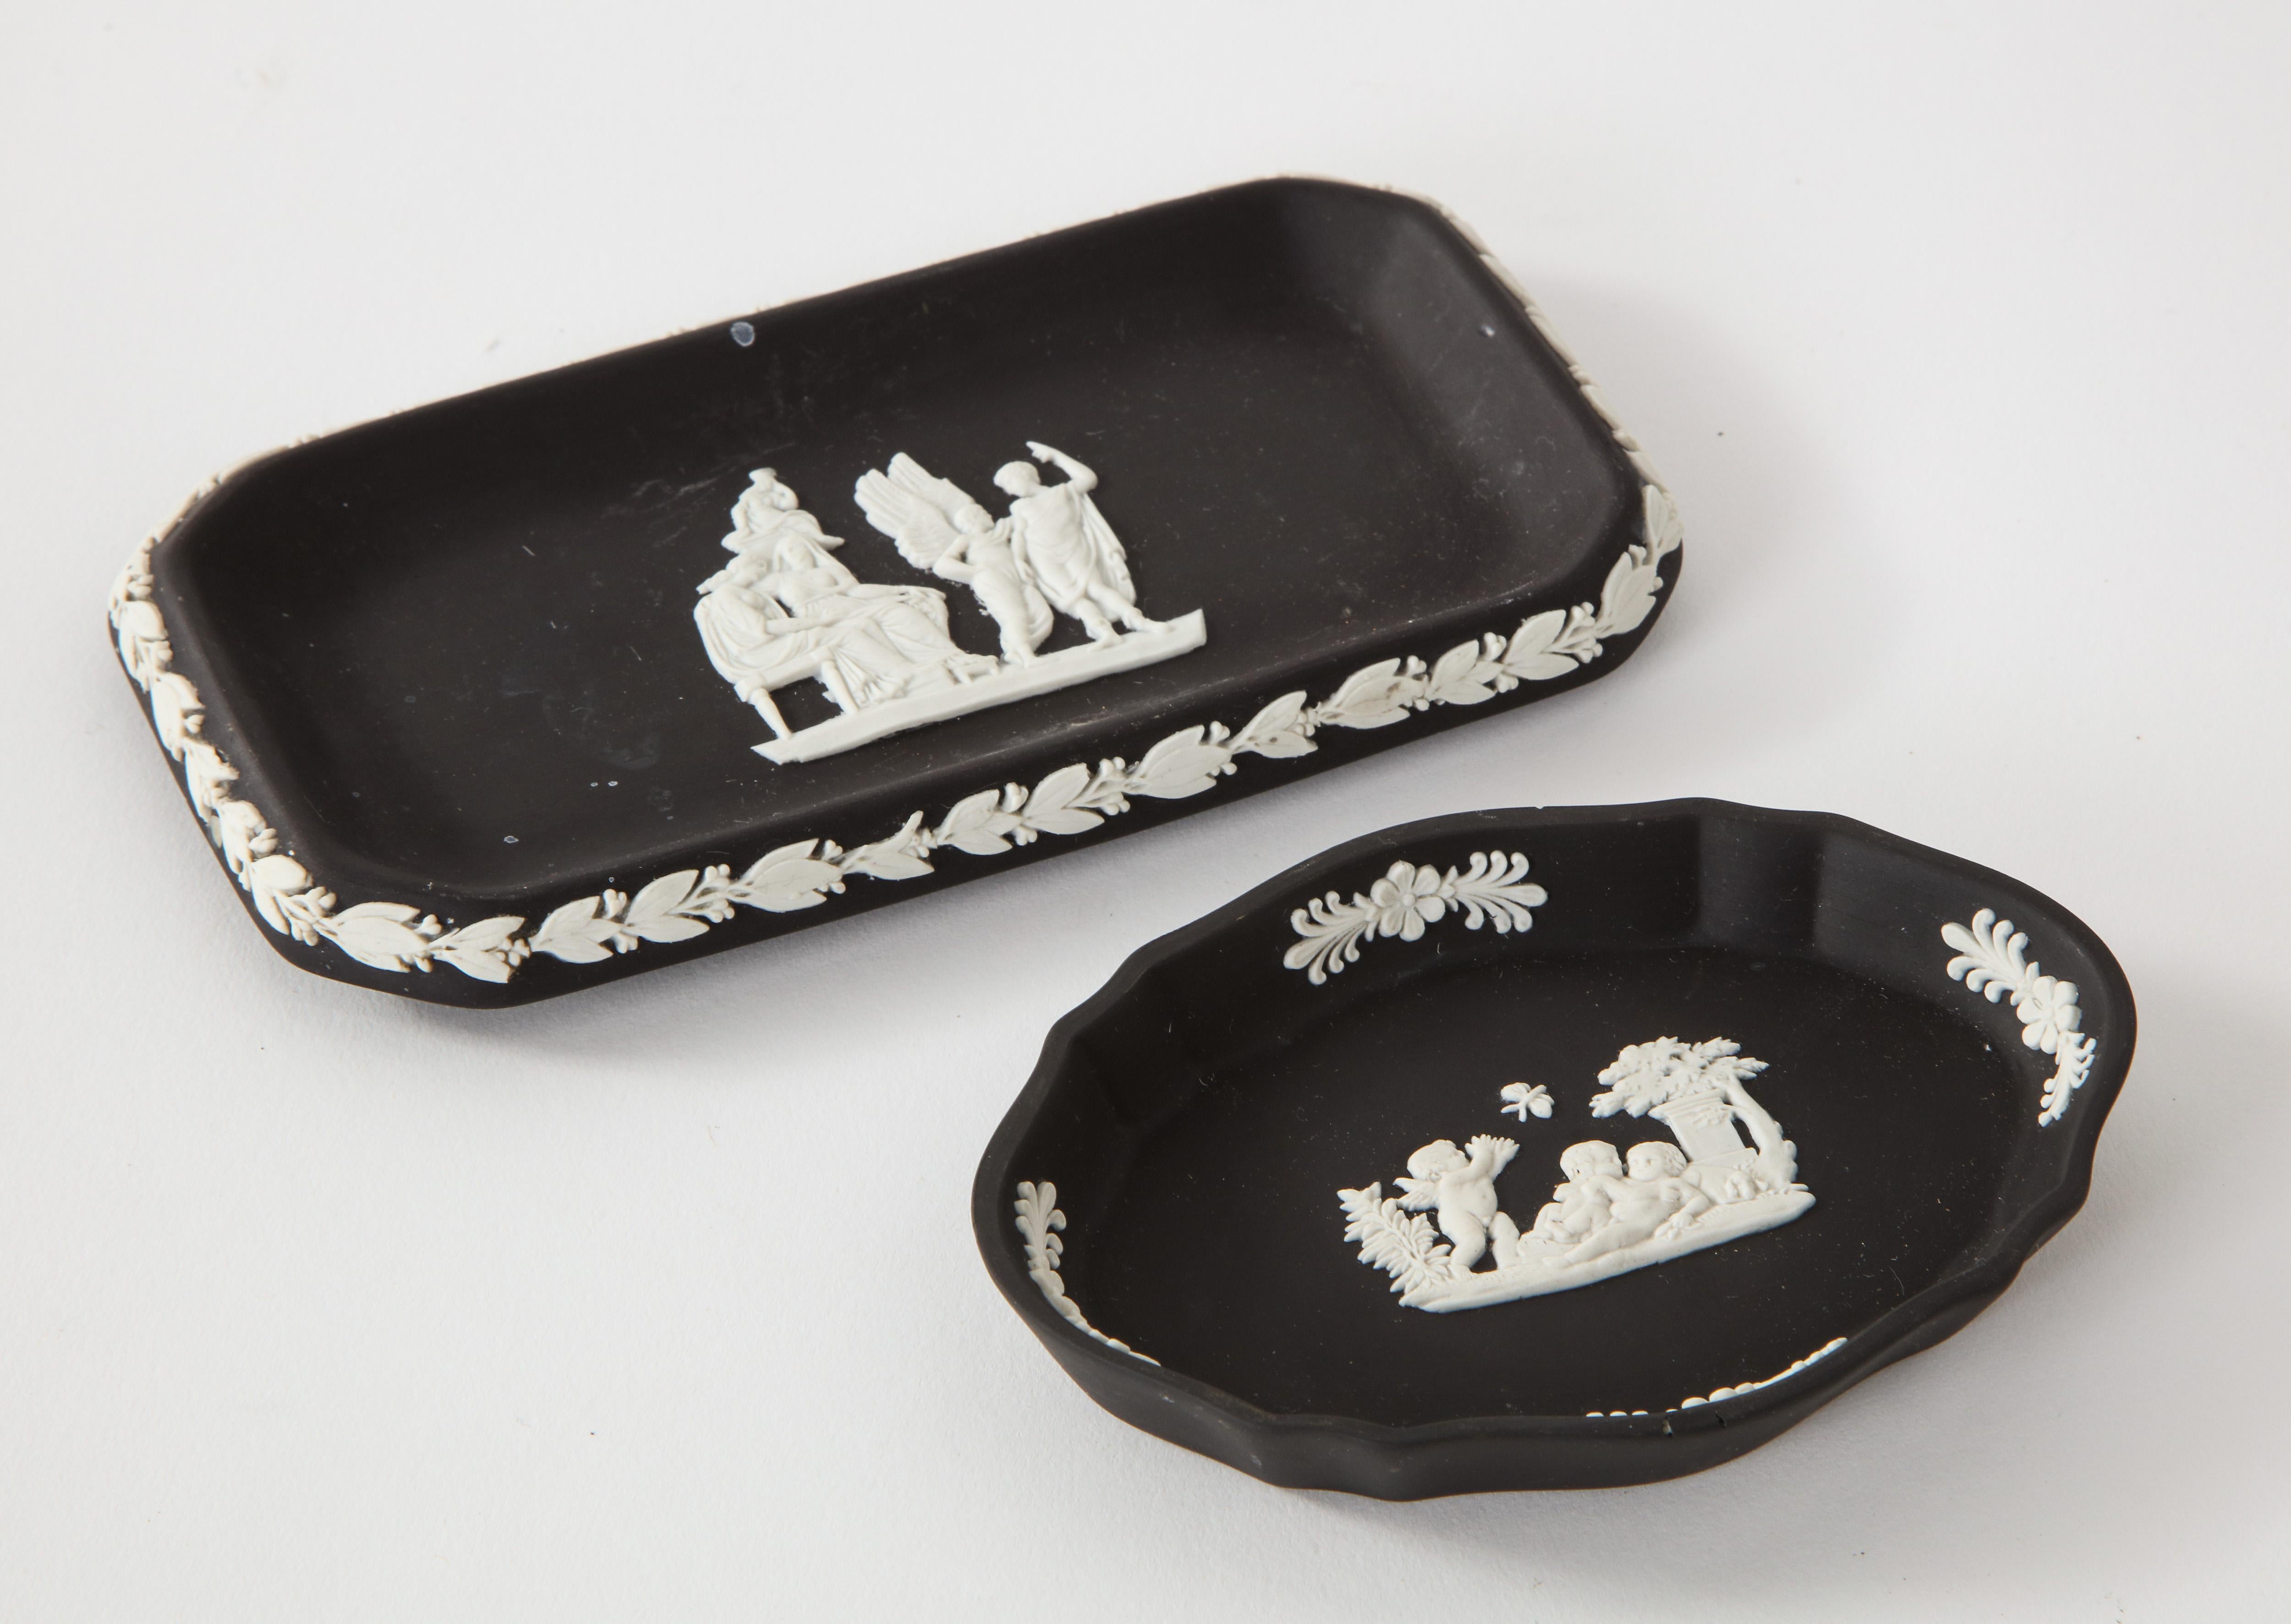 Two black and white antique basalt Wedgwood Jasperware trays. 

Measures: Rectangular: 5.75